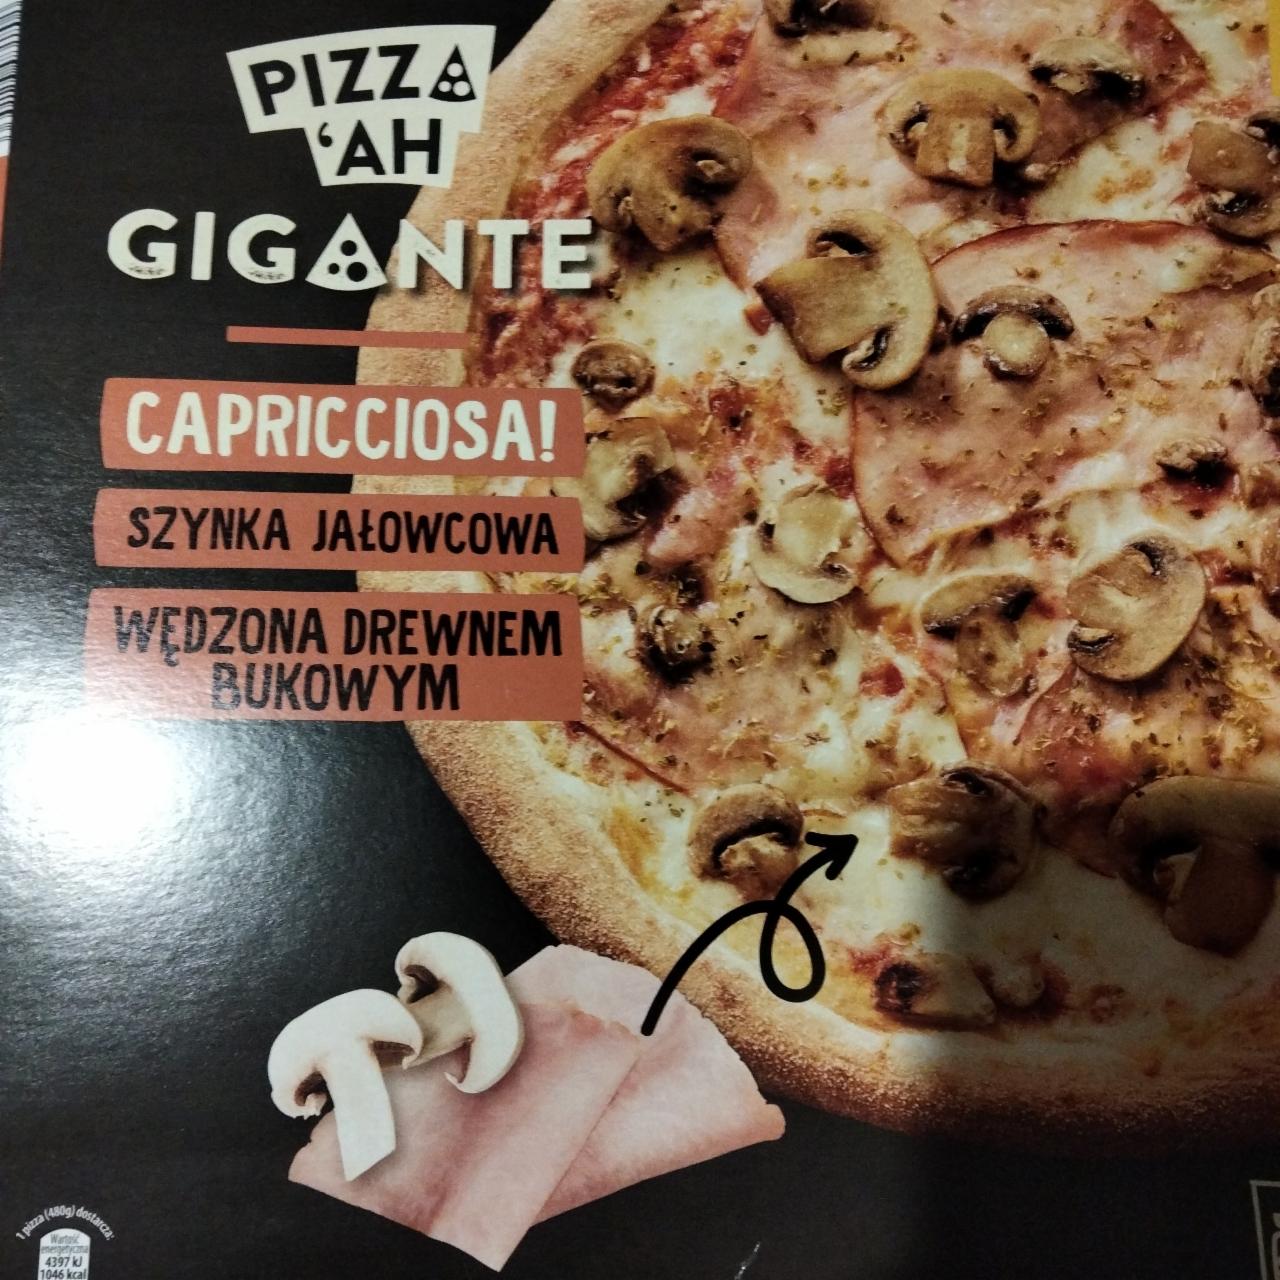 Zdjęcia - Gigante capriciosa pizza 'ah